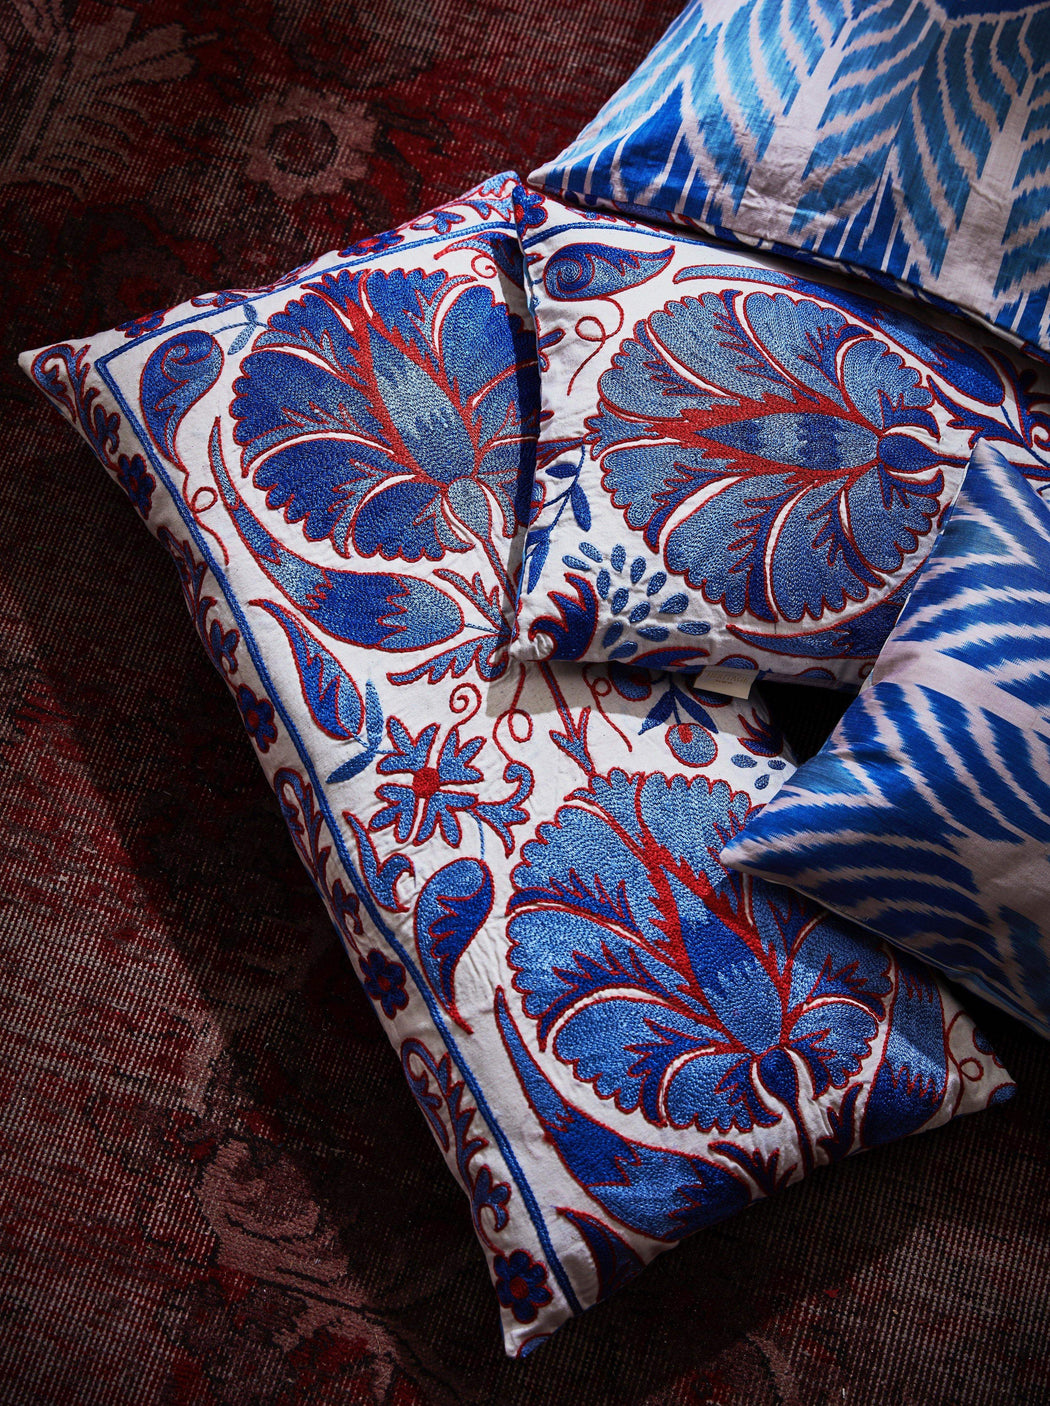 Babylon Cedar Suzani Cushion Double Sided With Ikat Heritage Design - Heritage Geneve